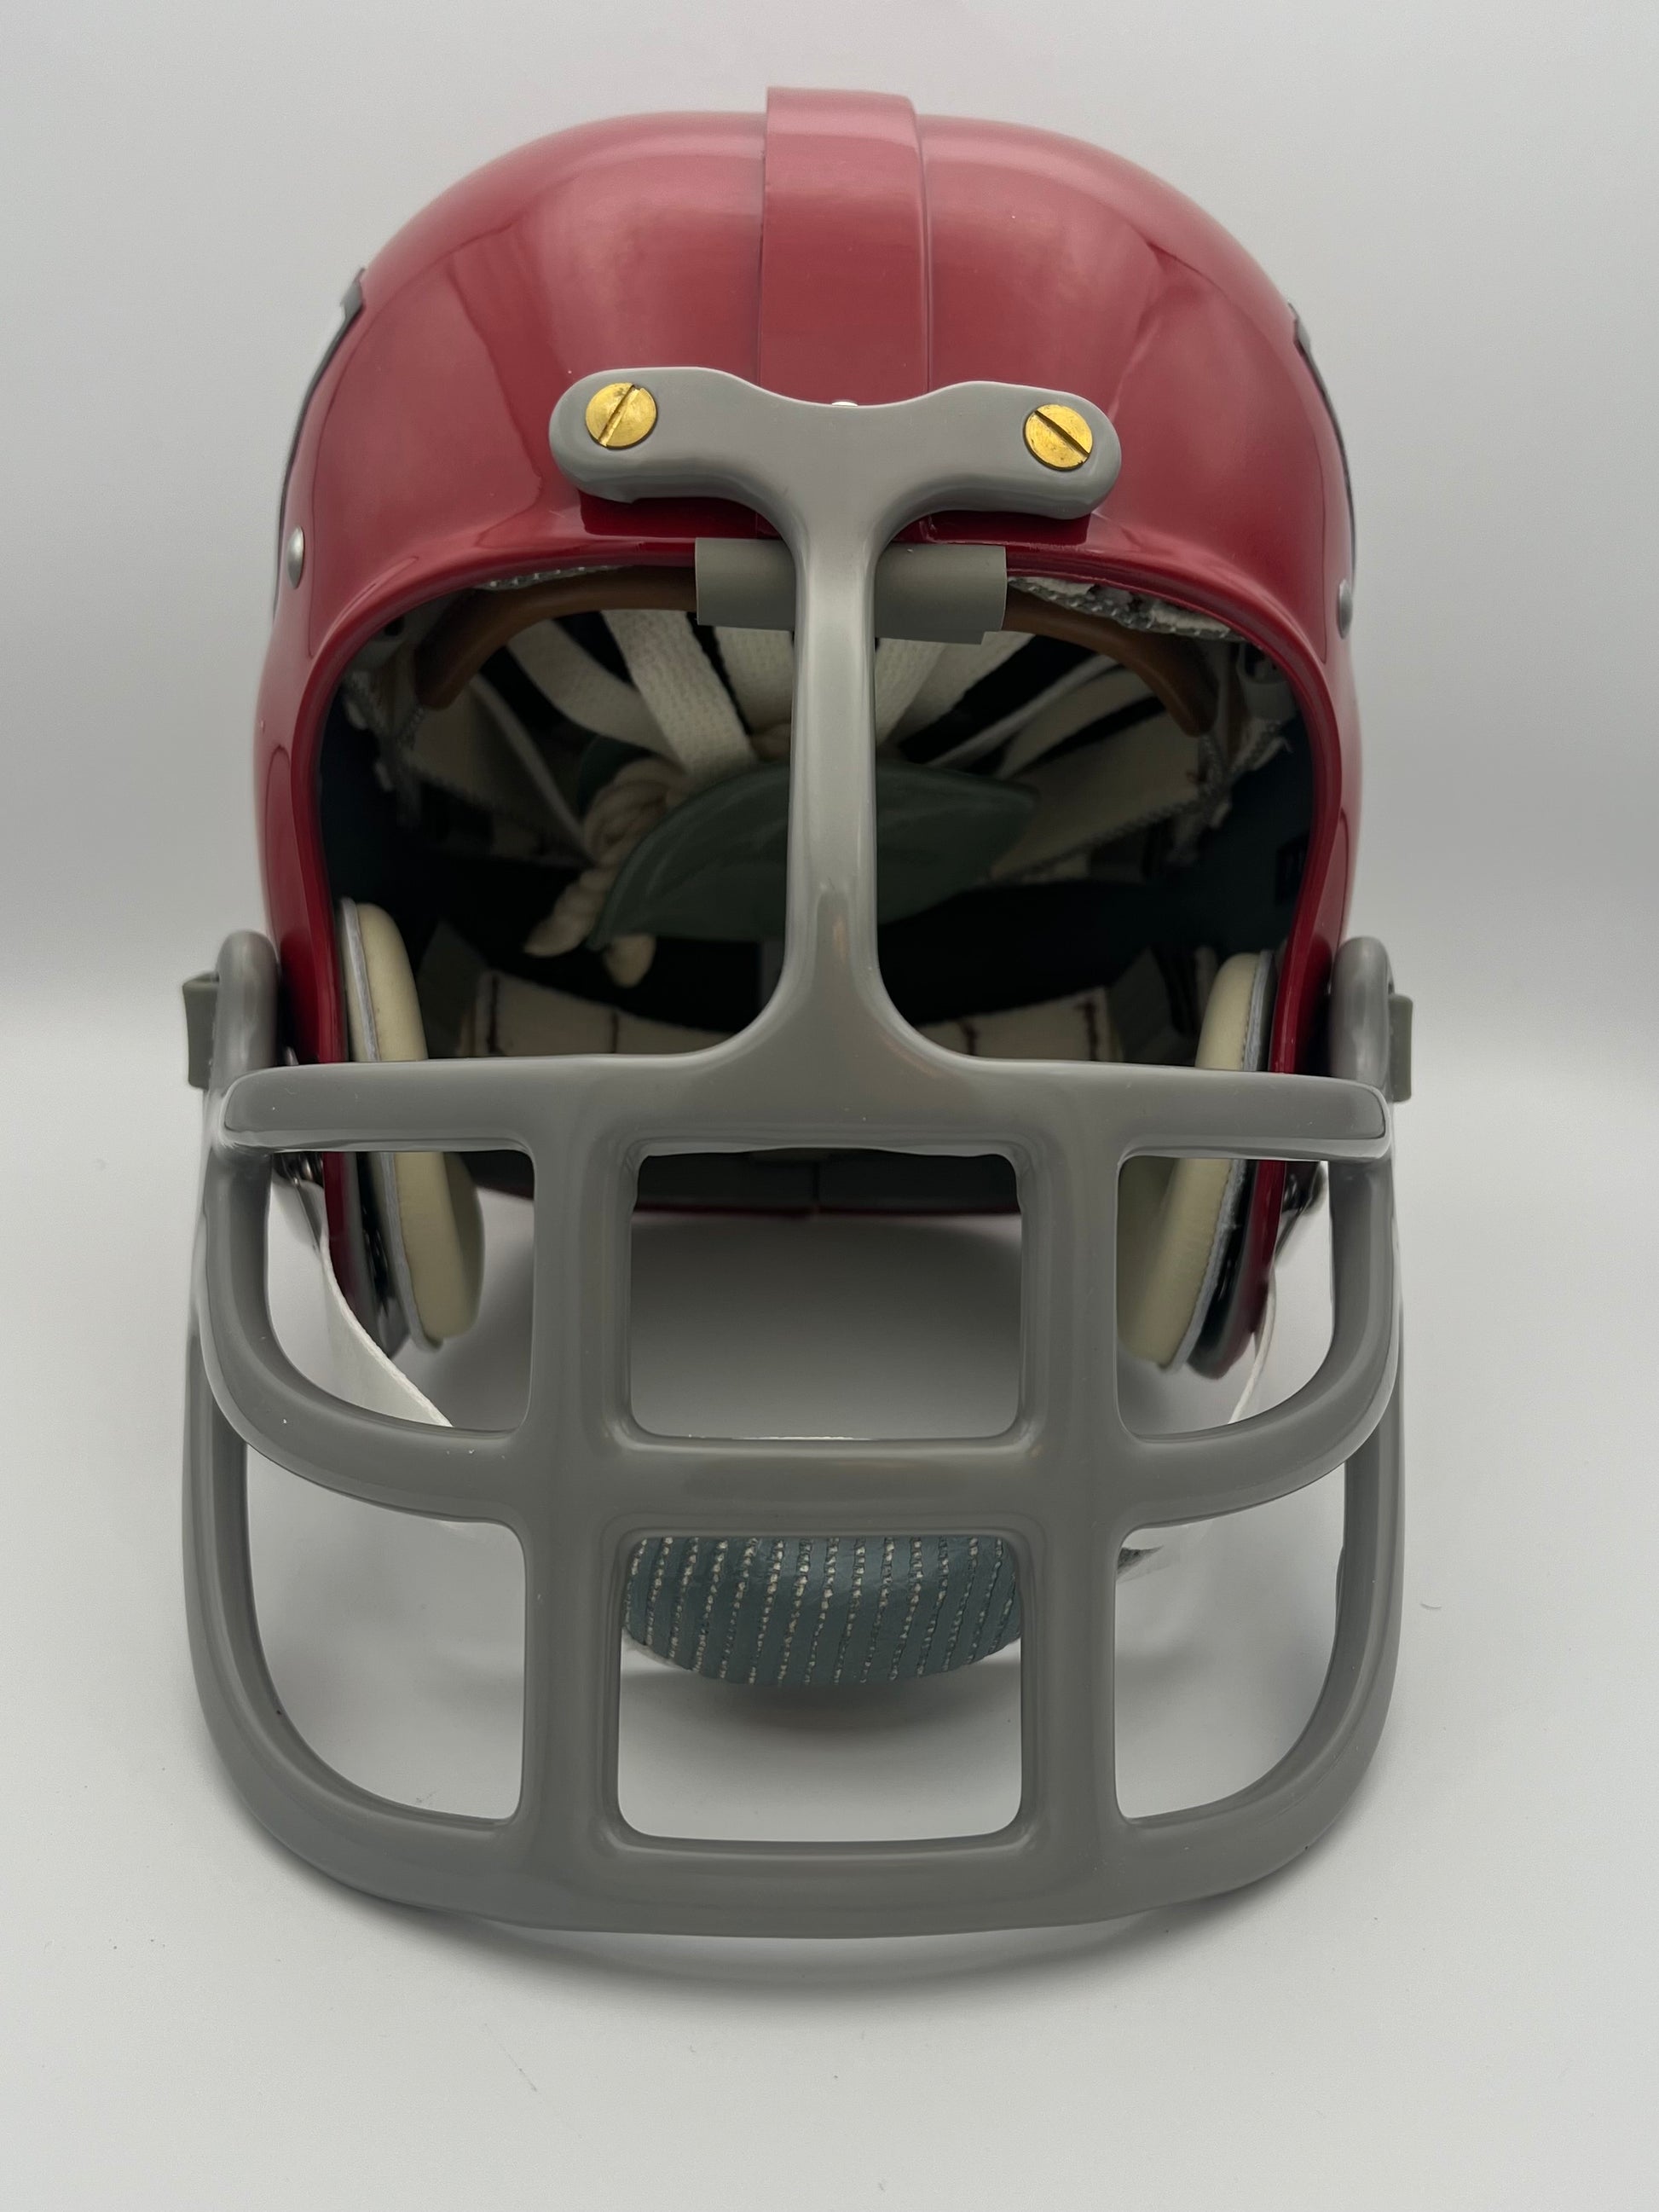 RK Vintage Style Kansas City Chiefs Football Helmet Ed Budde Super Bowl IV 4 Sports Mem, Cards & Fan Shop:Game Used Memorabilia:Football-NFL:Helmet WESTBROOKSPORTSCARDS   